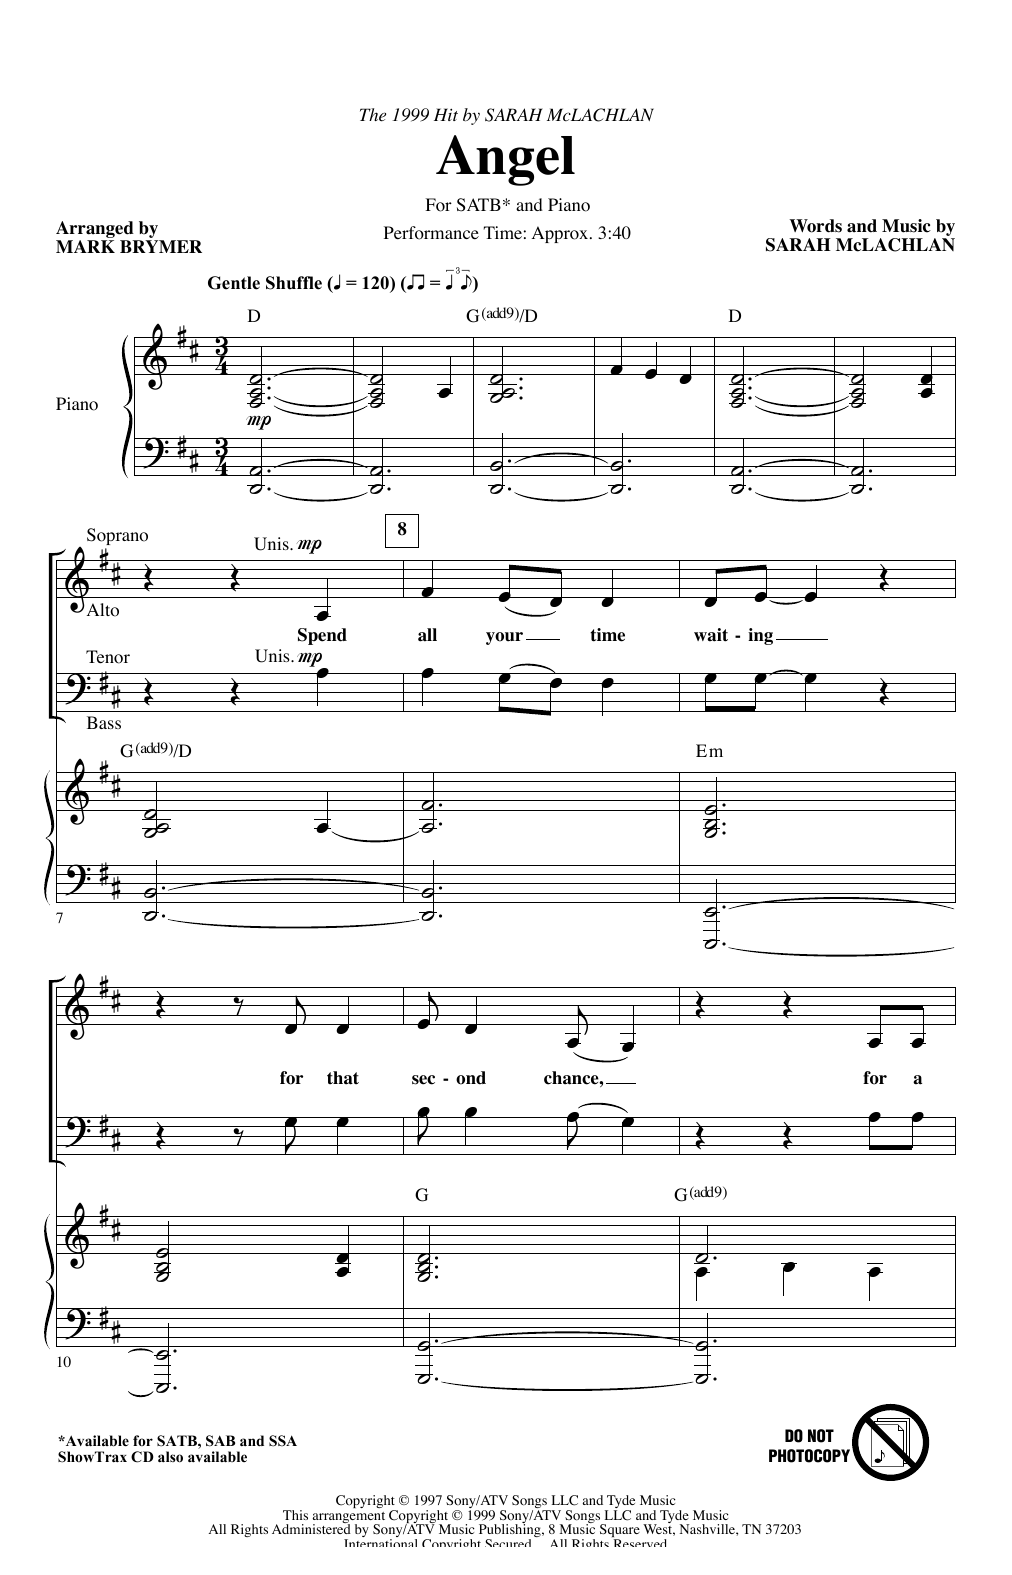 Sarah McLachlan Angel (arr. Mark Brymer) Sheet Music Notes & Chords for SSA Choir - Download or Print PDF